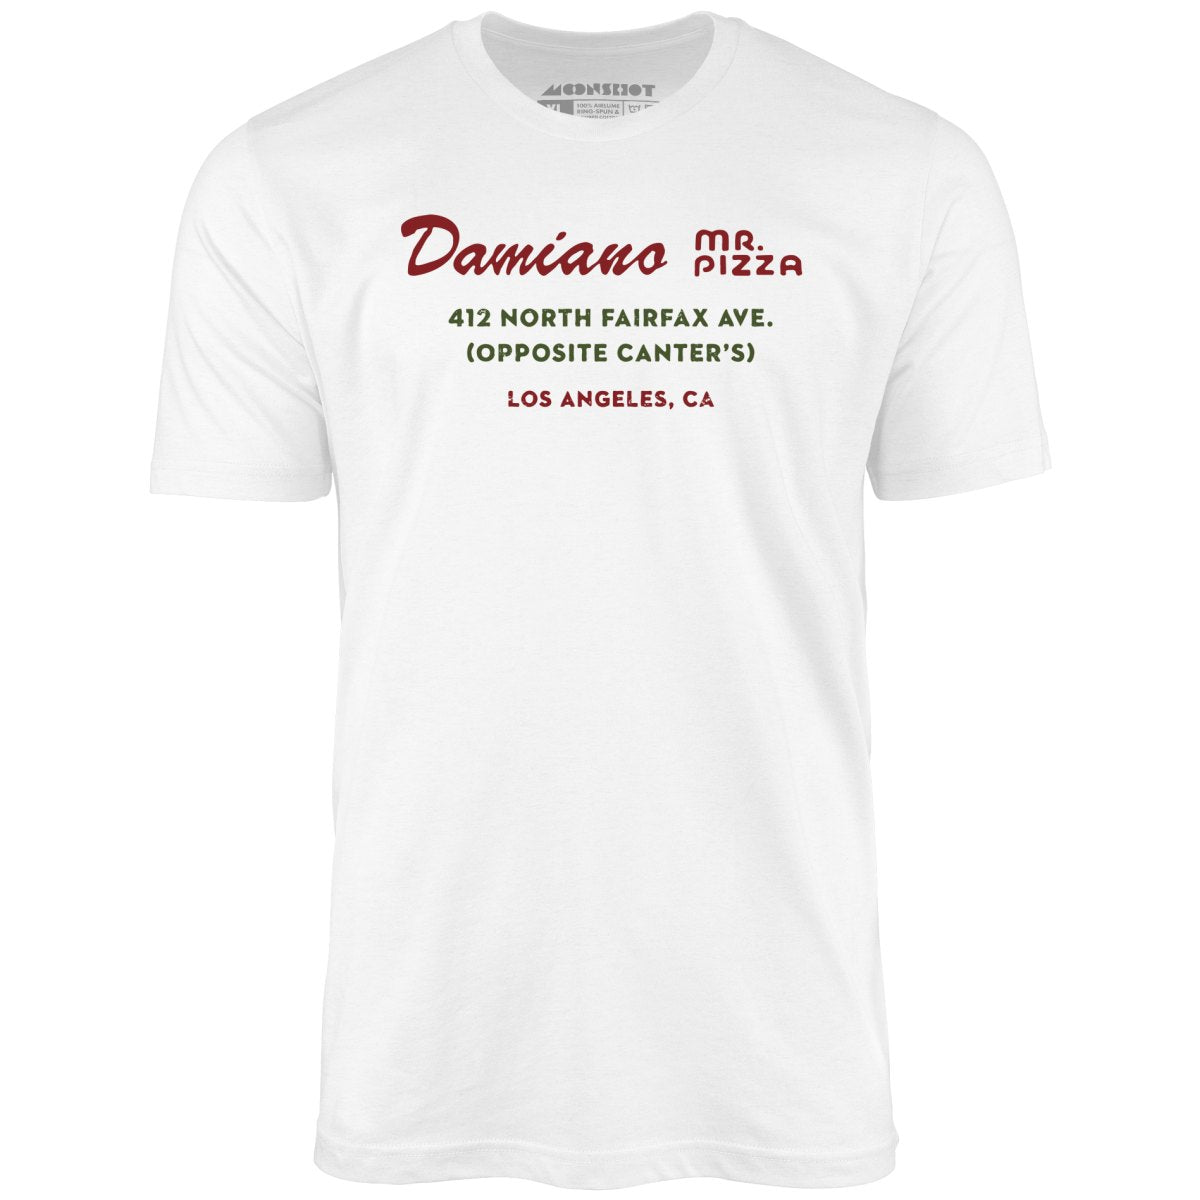 Damiano Mr. Pizza - Los Angeles, CA - Vintage Restaurant - Unisex T-Shirt